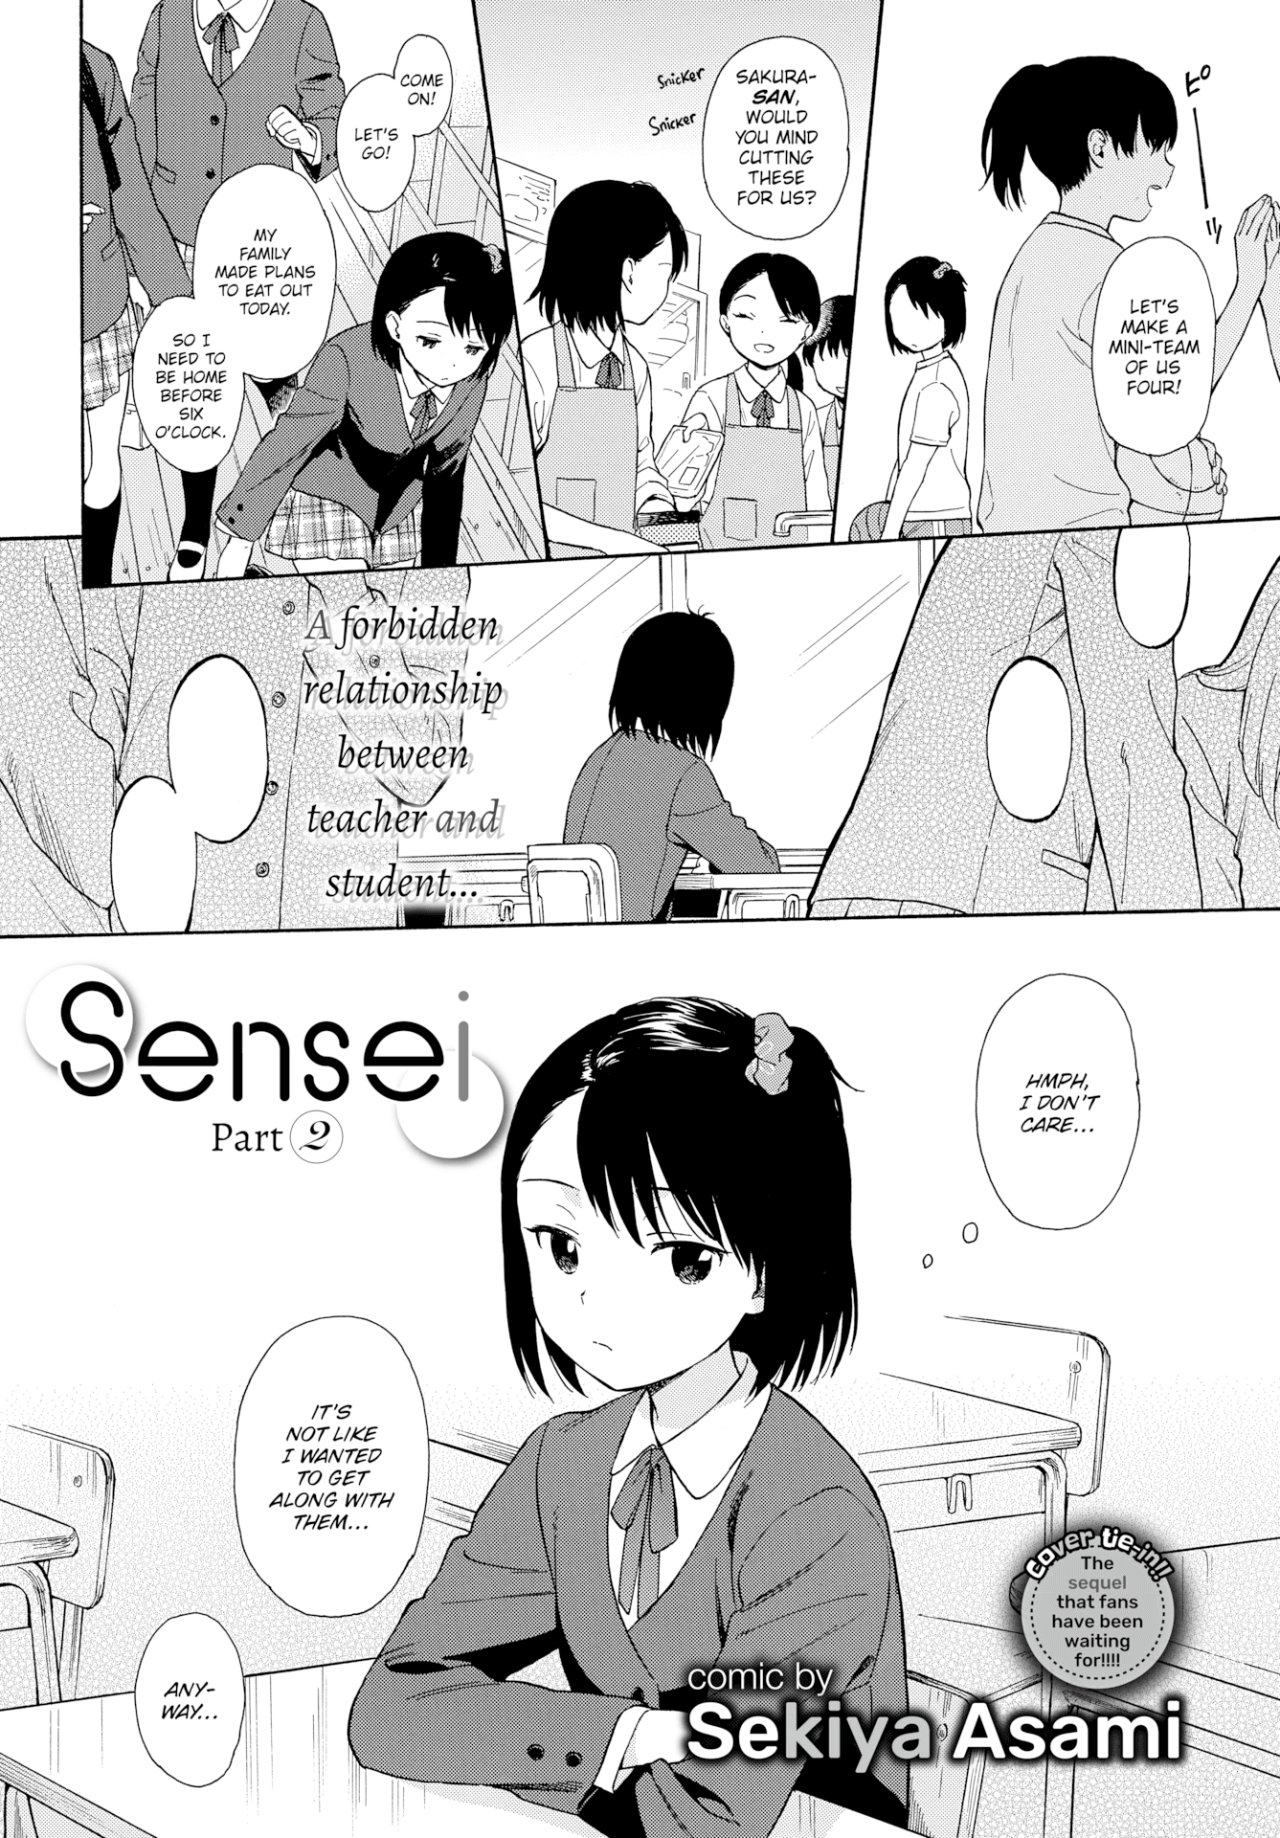 Sensei Part 2 - 1